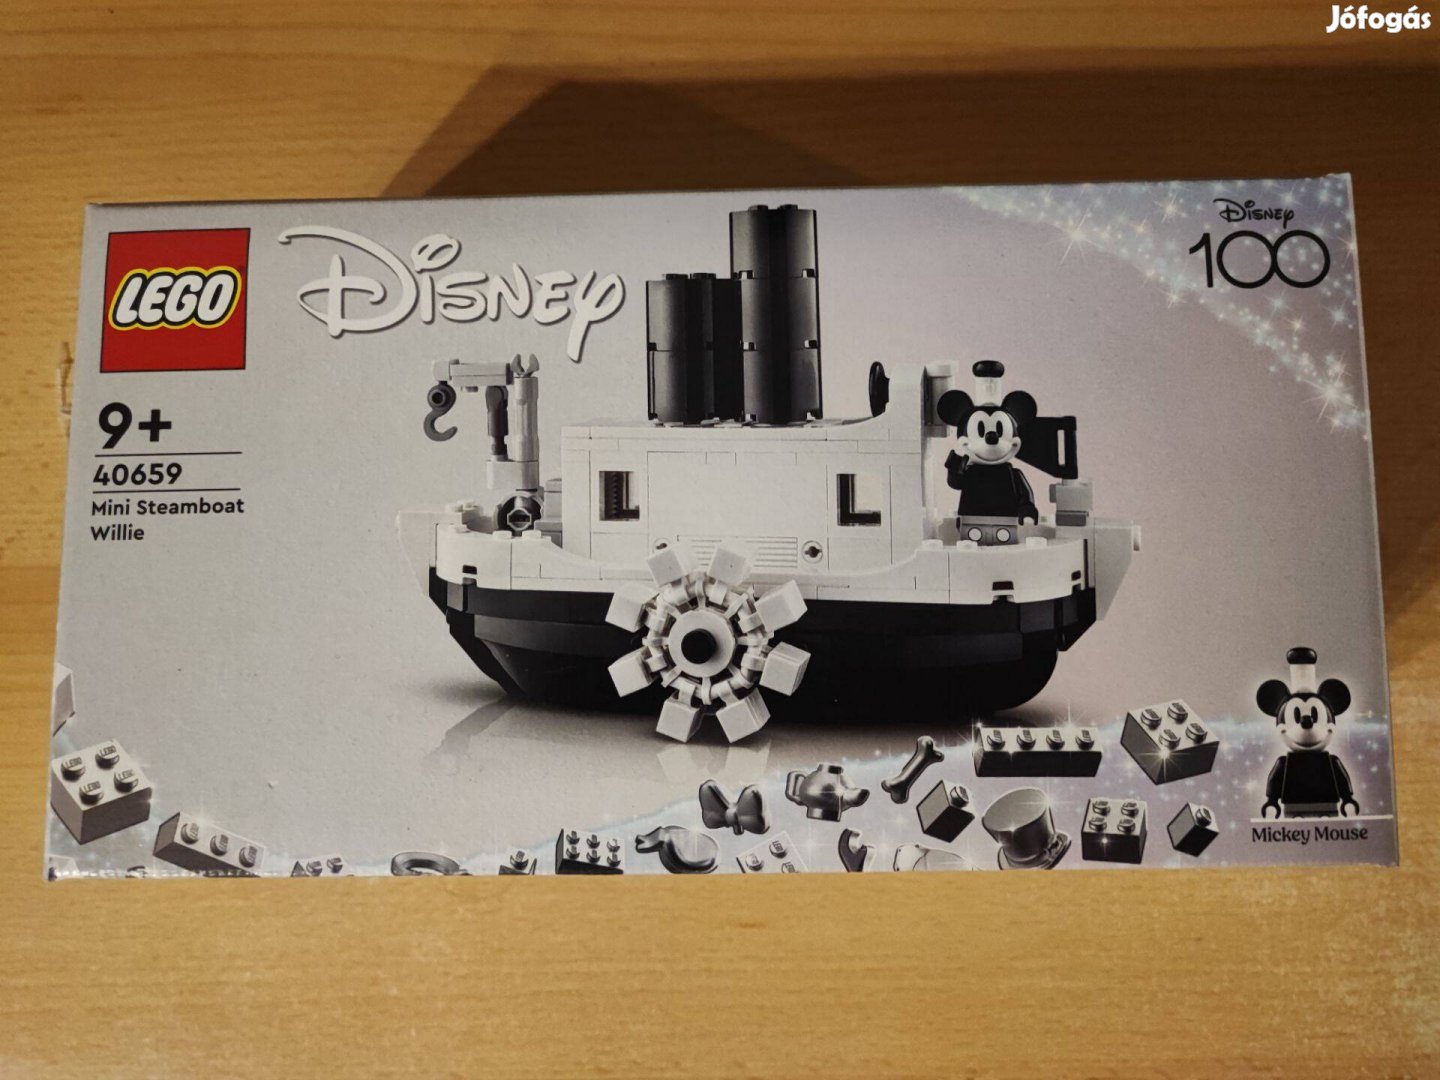 Új, bontatlan Lego Disney - Willie mini gőzhajó - 40659